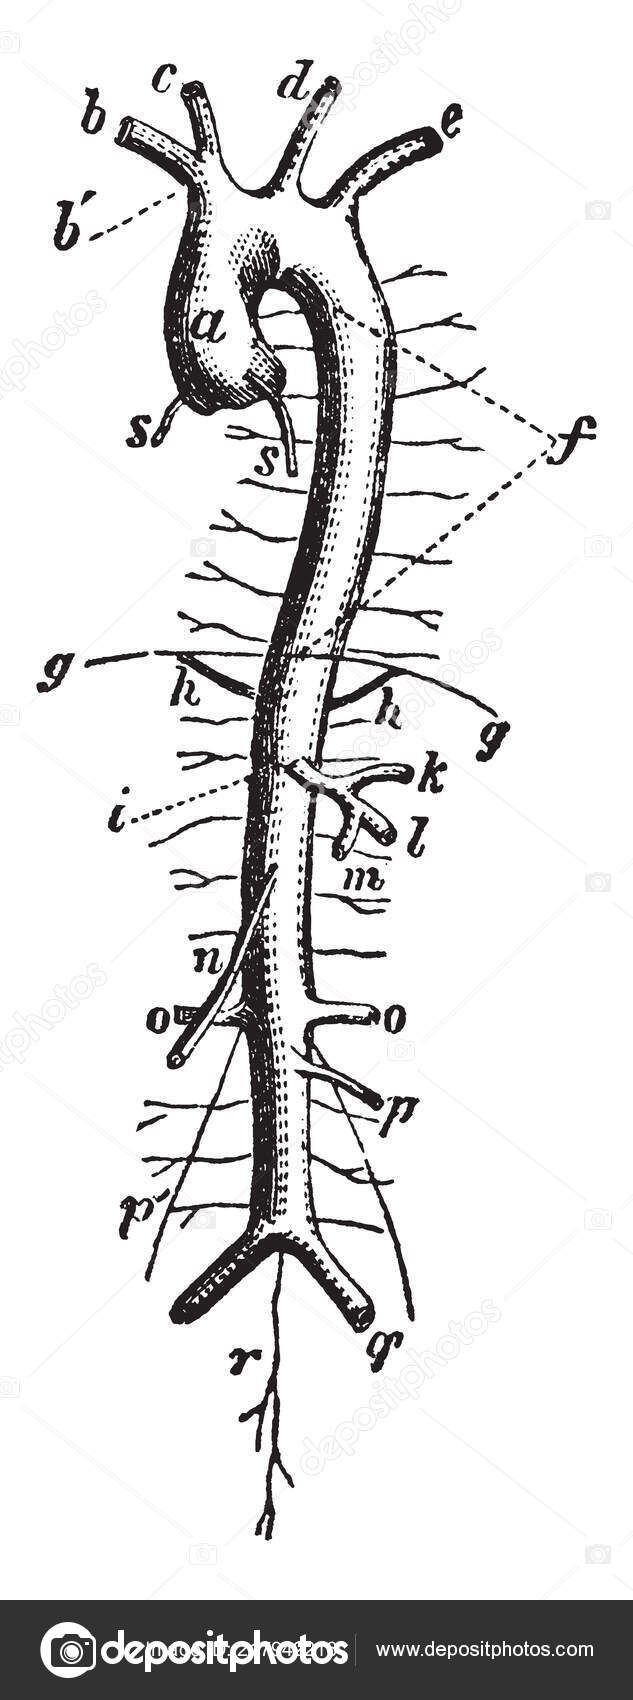 Diagram Represents Aorta Ascending Arch Aorta Vintage Line Drawing